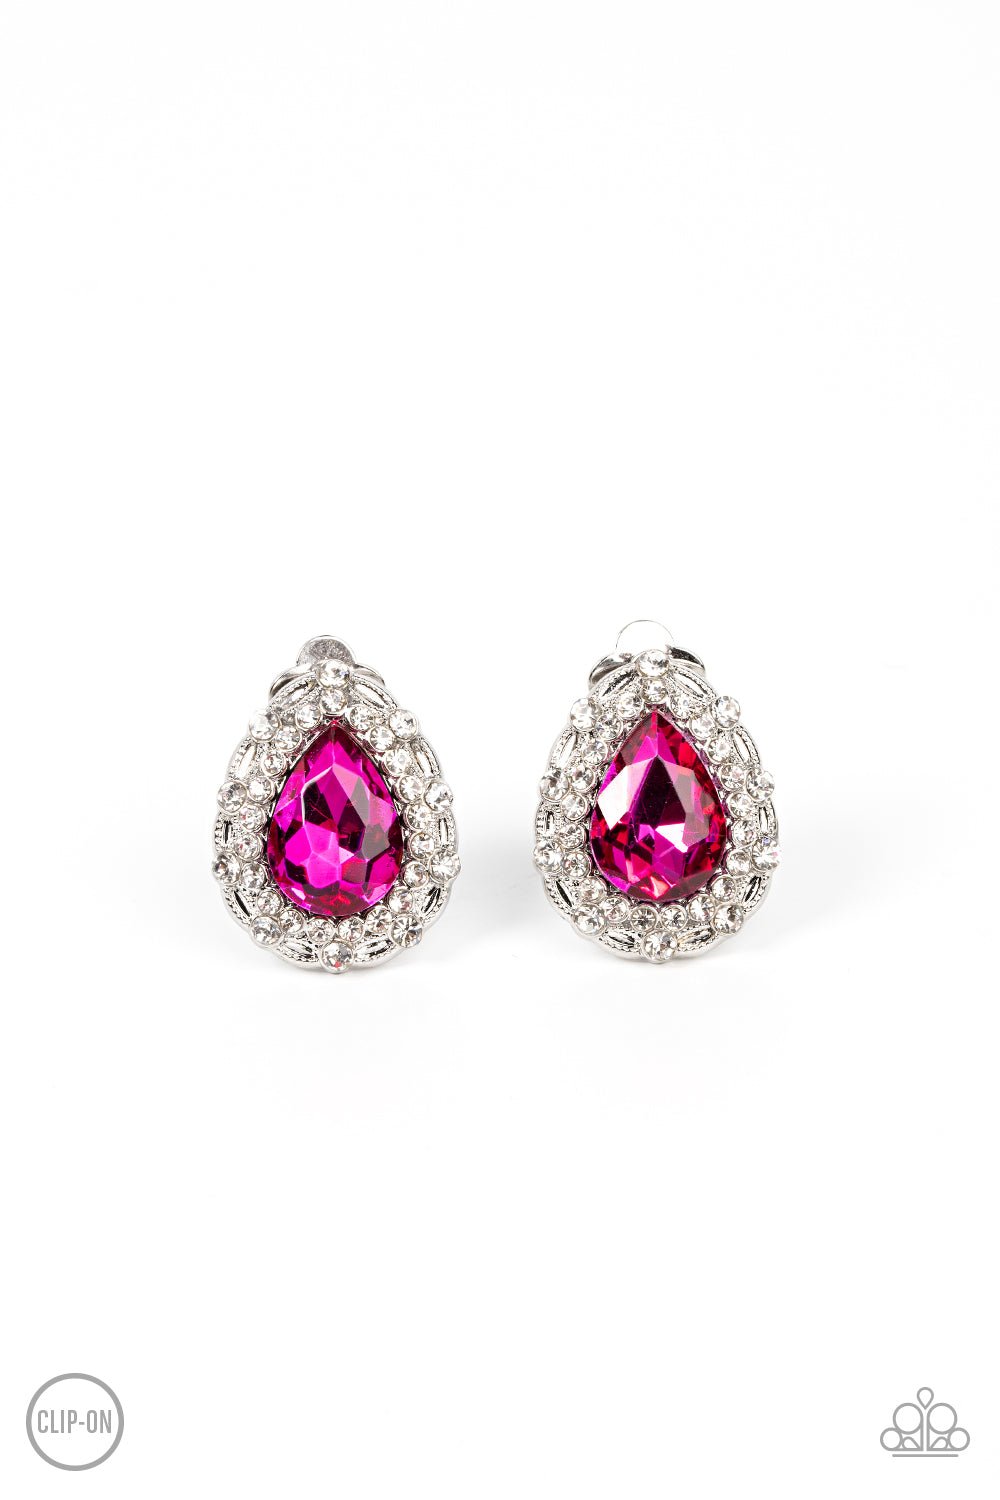 Haute Happy Hour - Pink Teardrop Rhinestone Clip On Earrings - Paparazzi Accessories